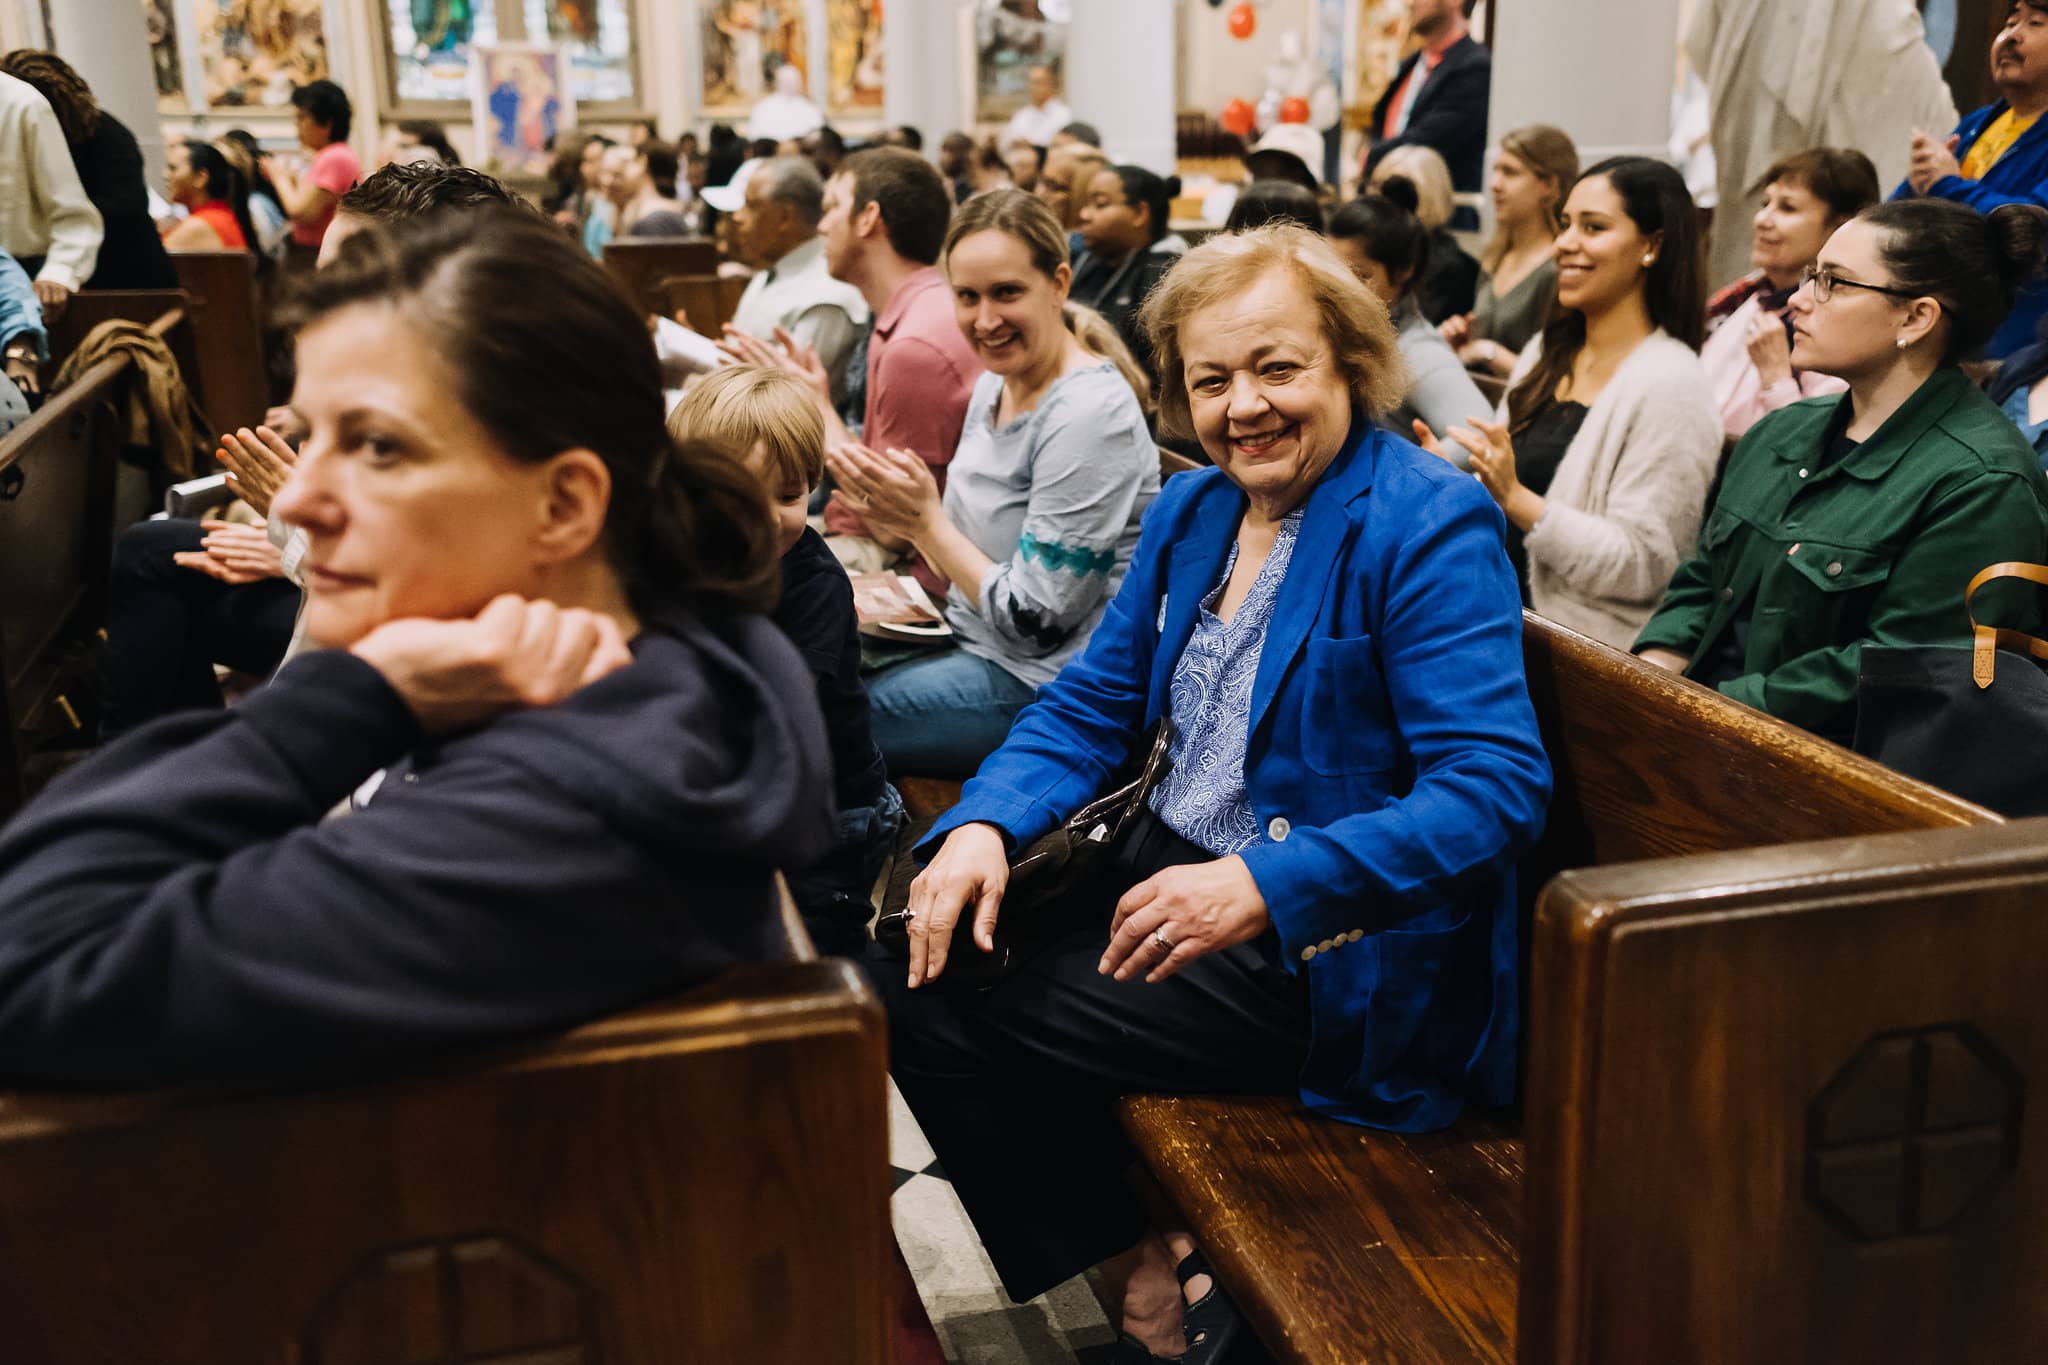 community-diversity-seniors-mass-st-francis-de-sales-church-new-york-city.jpg